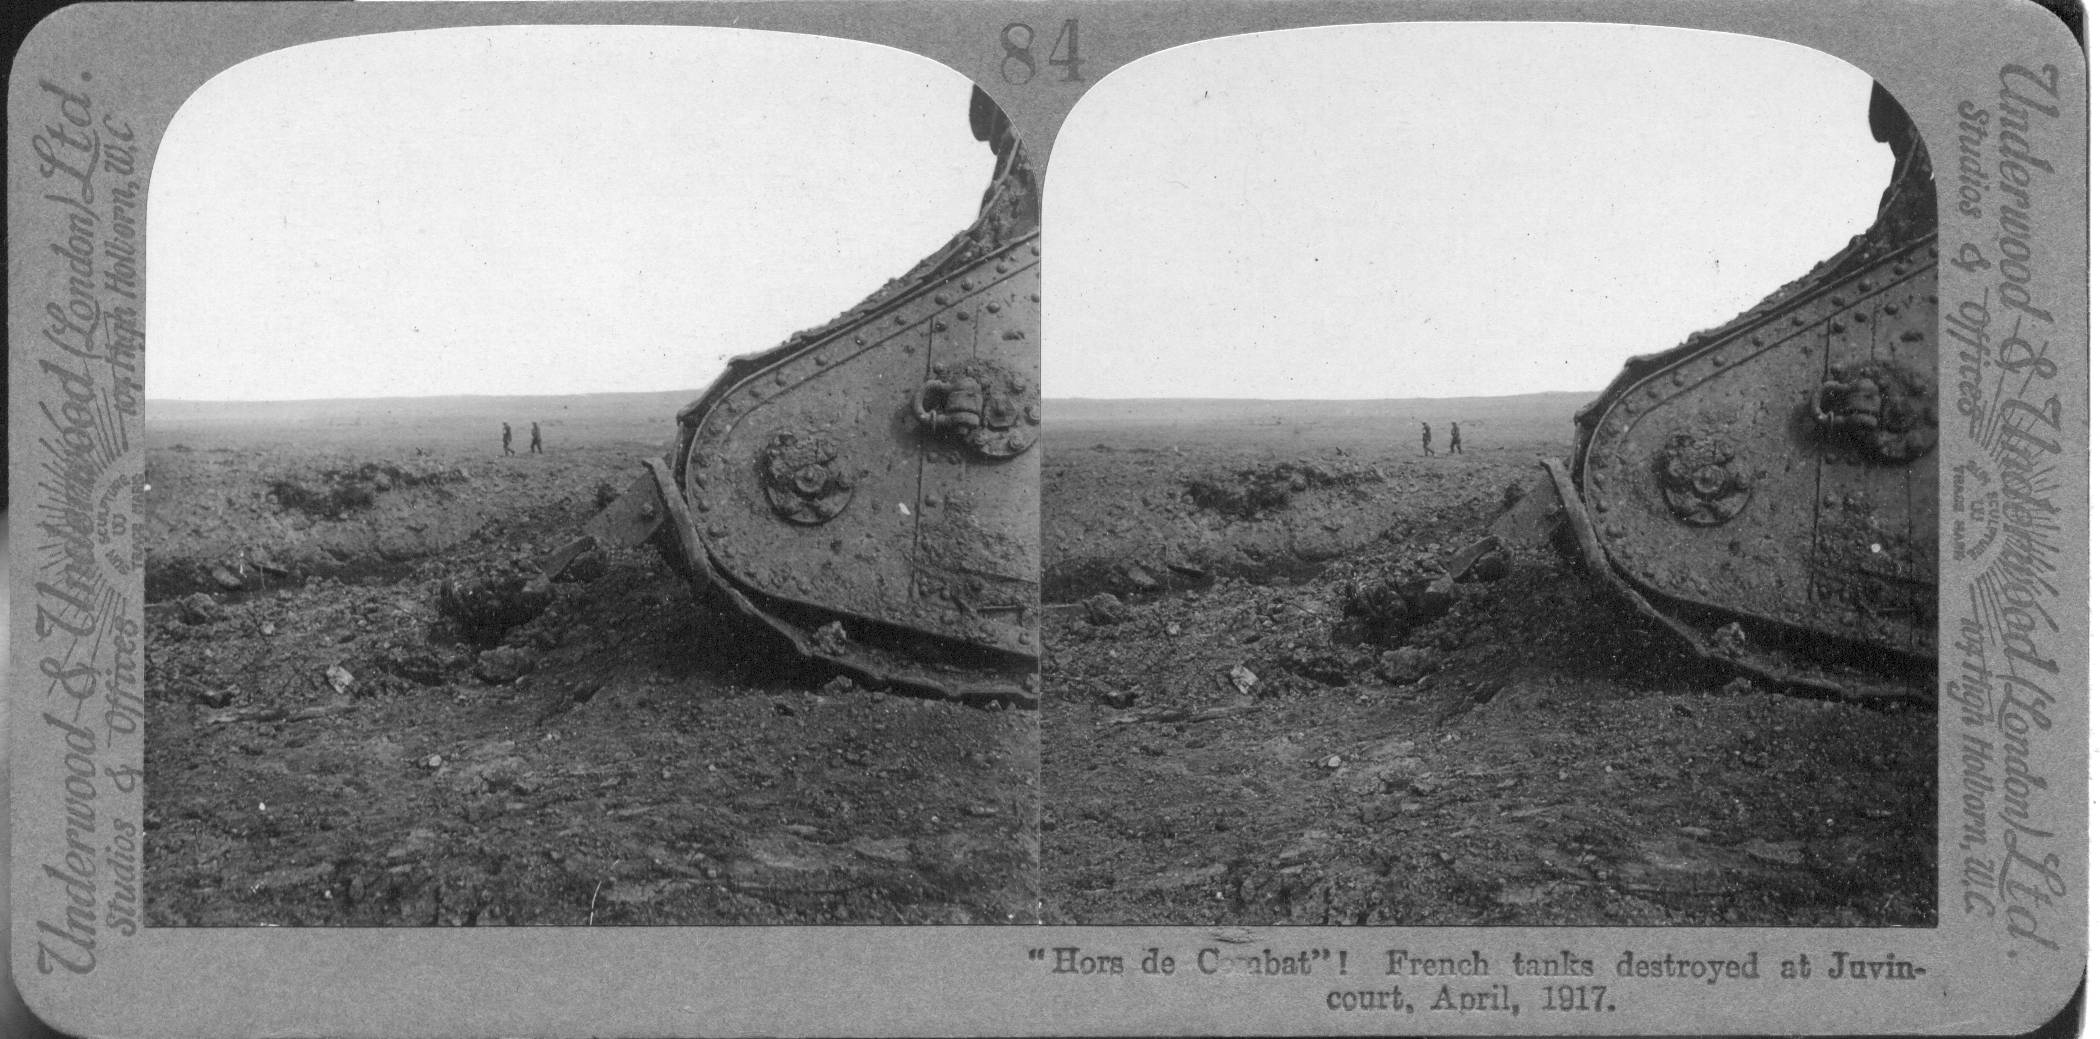 "Hors de Combat"! French tanks destroyed at Juvincourt, April, 1917